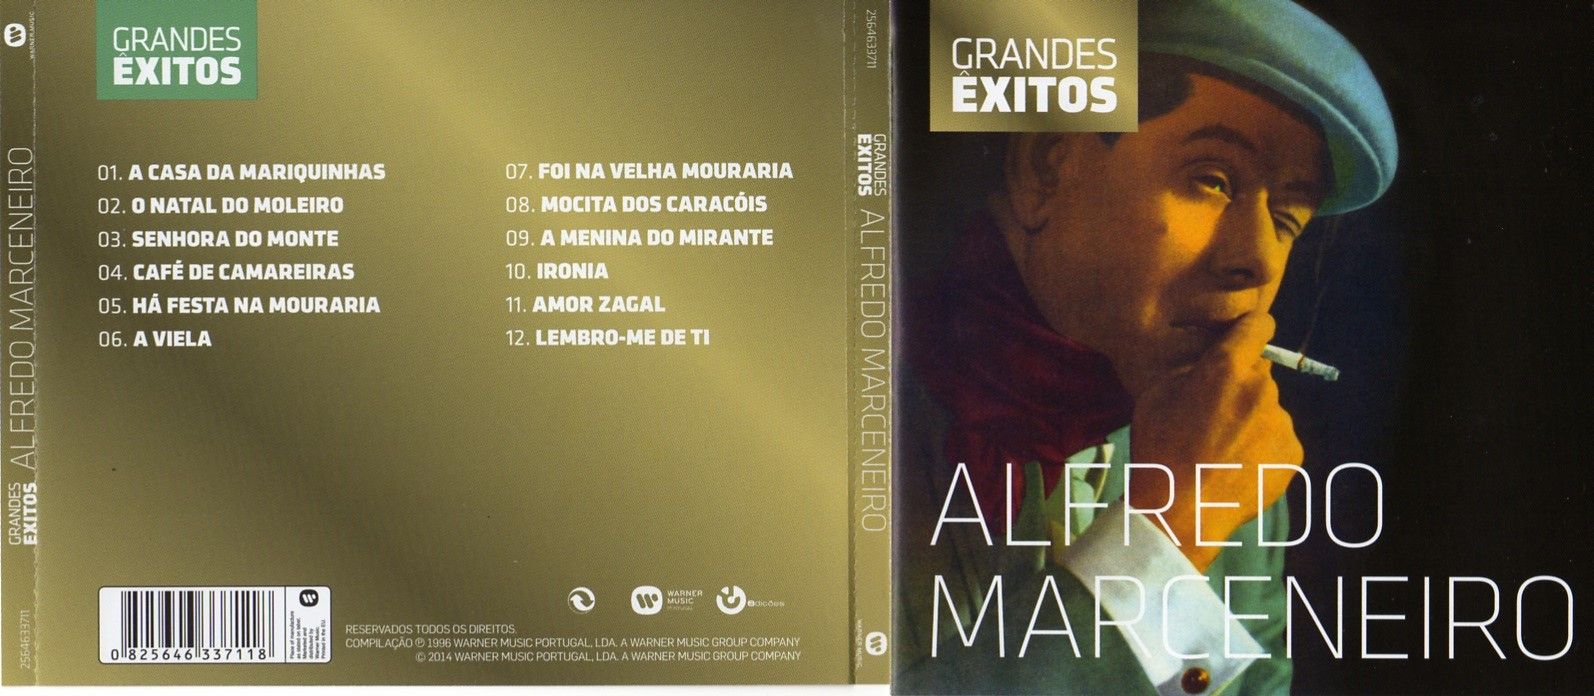 muy 48 - Alfredo Marceneiro - Grandes Exitos